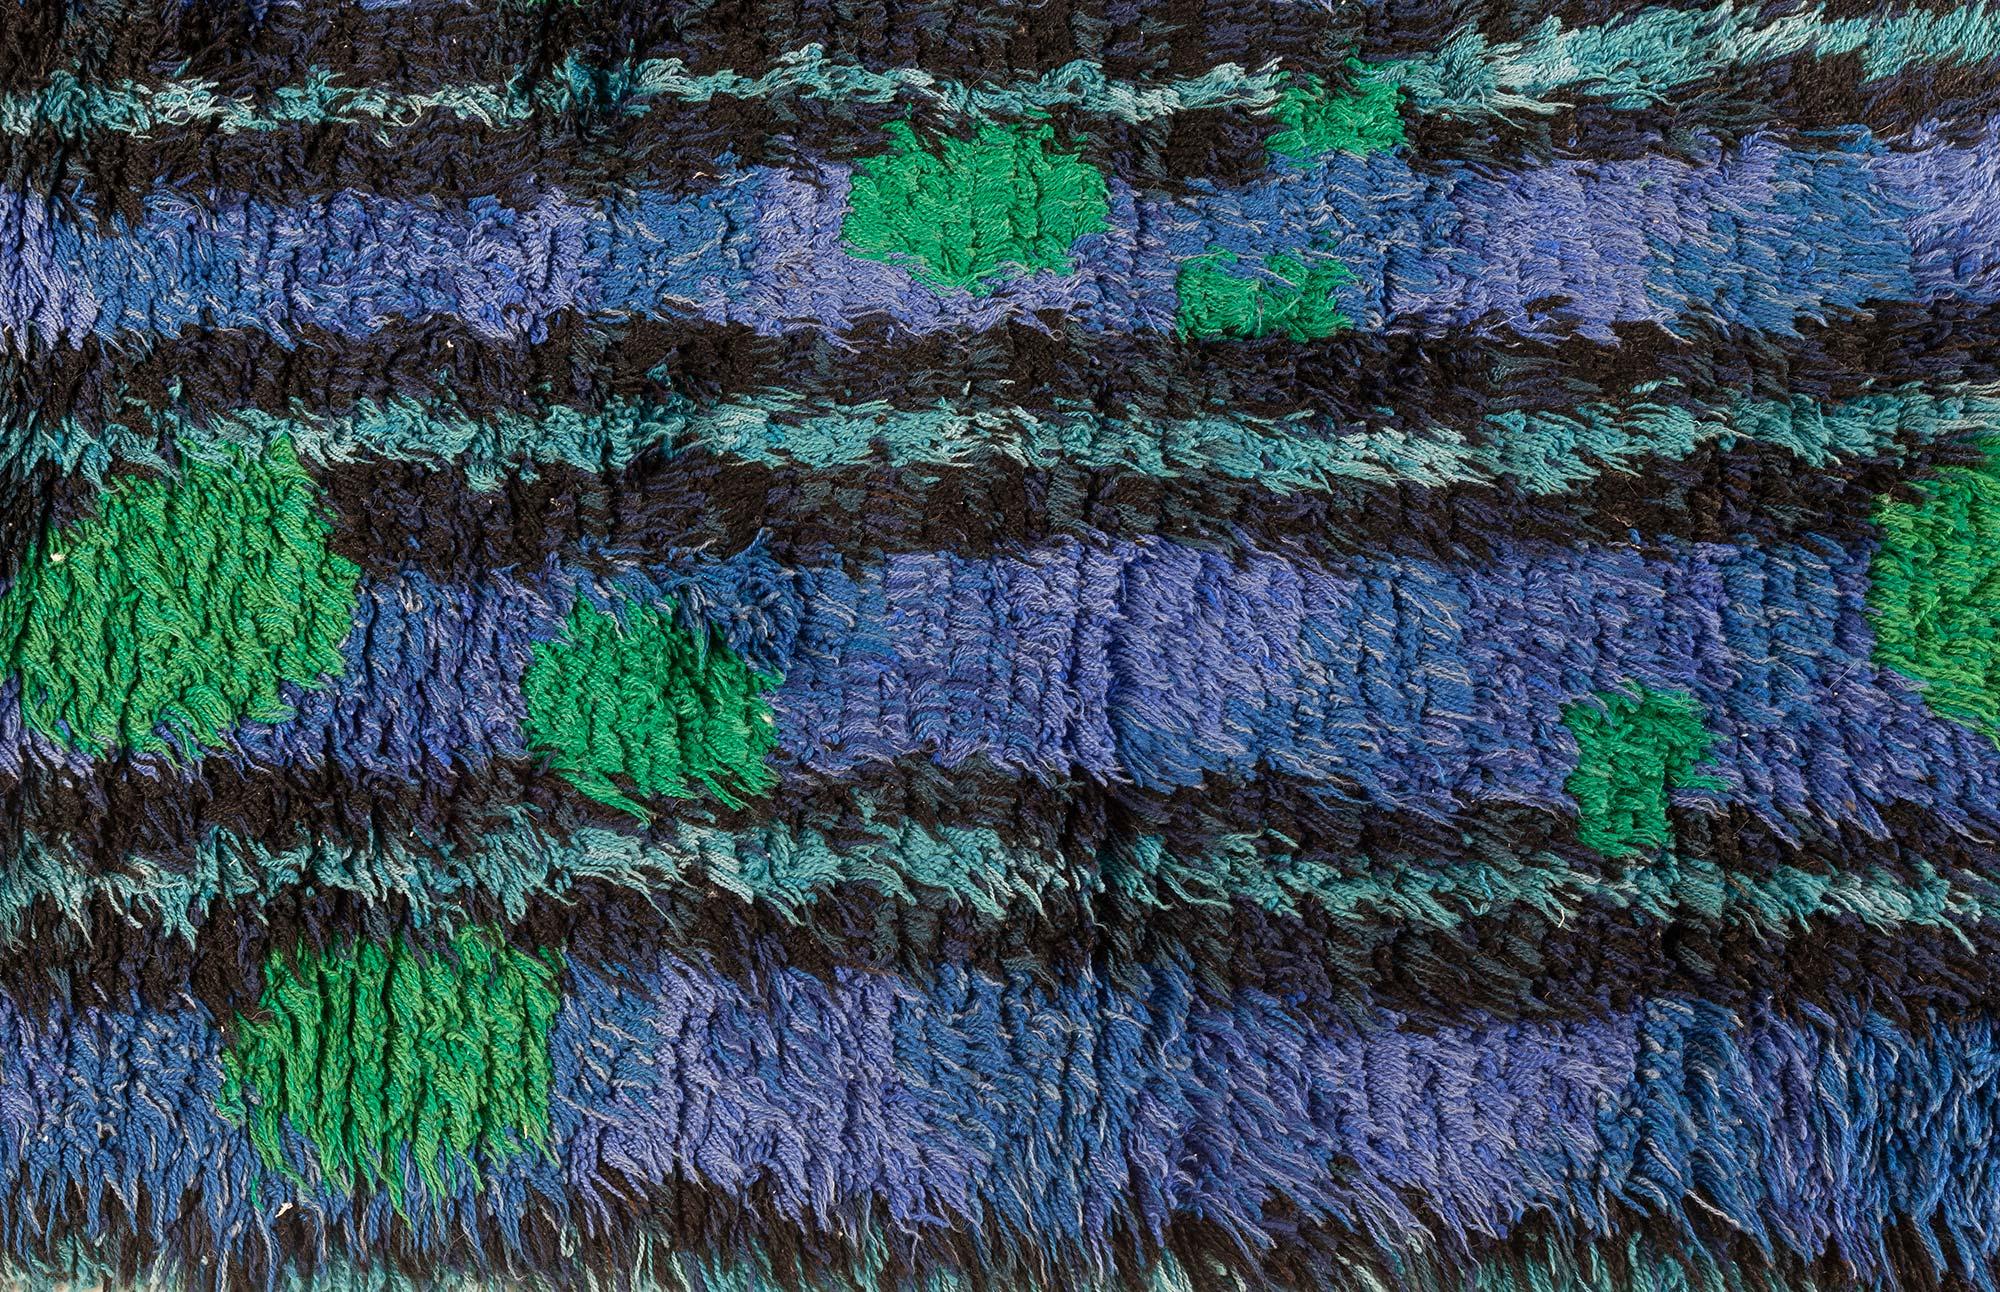 Mid-20th Century Modern Swedish Rya green, blue rug
Size: 4'5